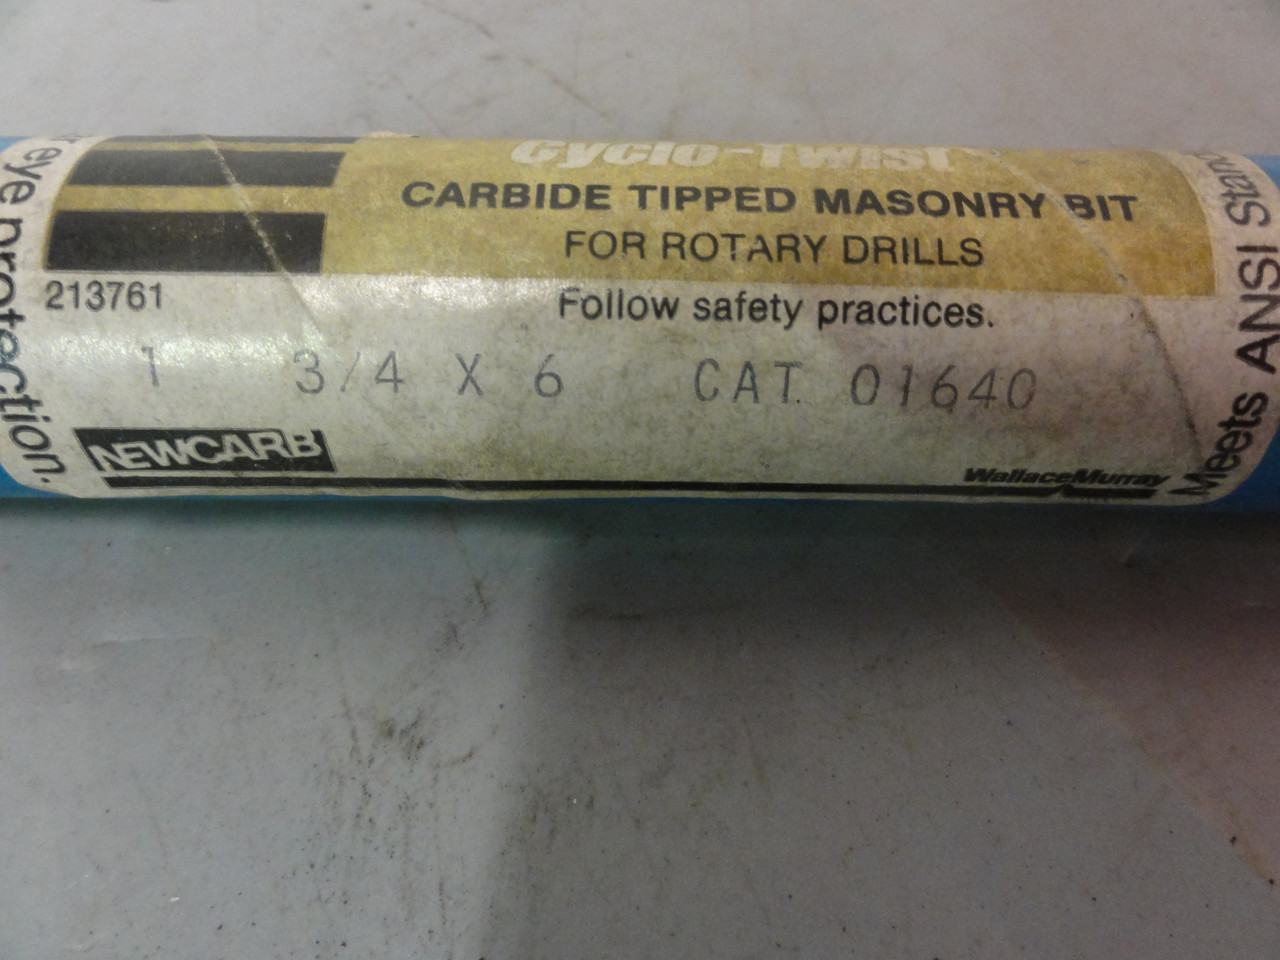 Vintage New England Carbide Cyclo Twist 01640 Carbide Tipped Masonry Bit 3/4 X 6